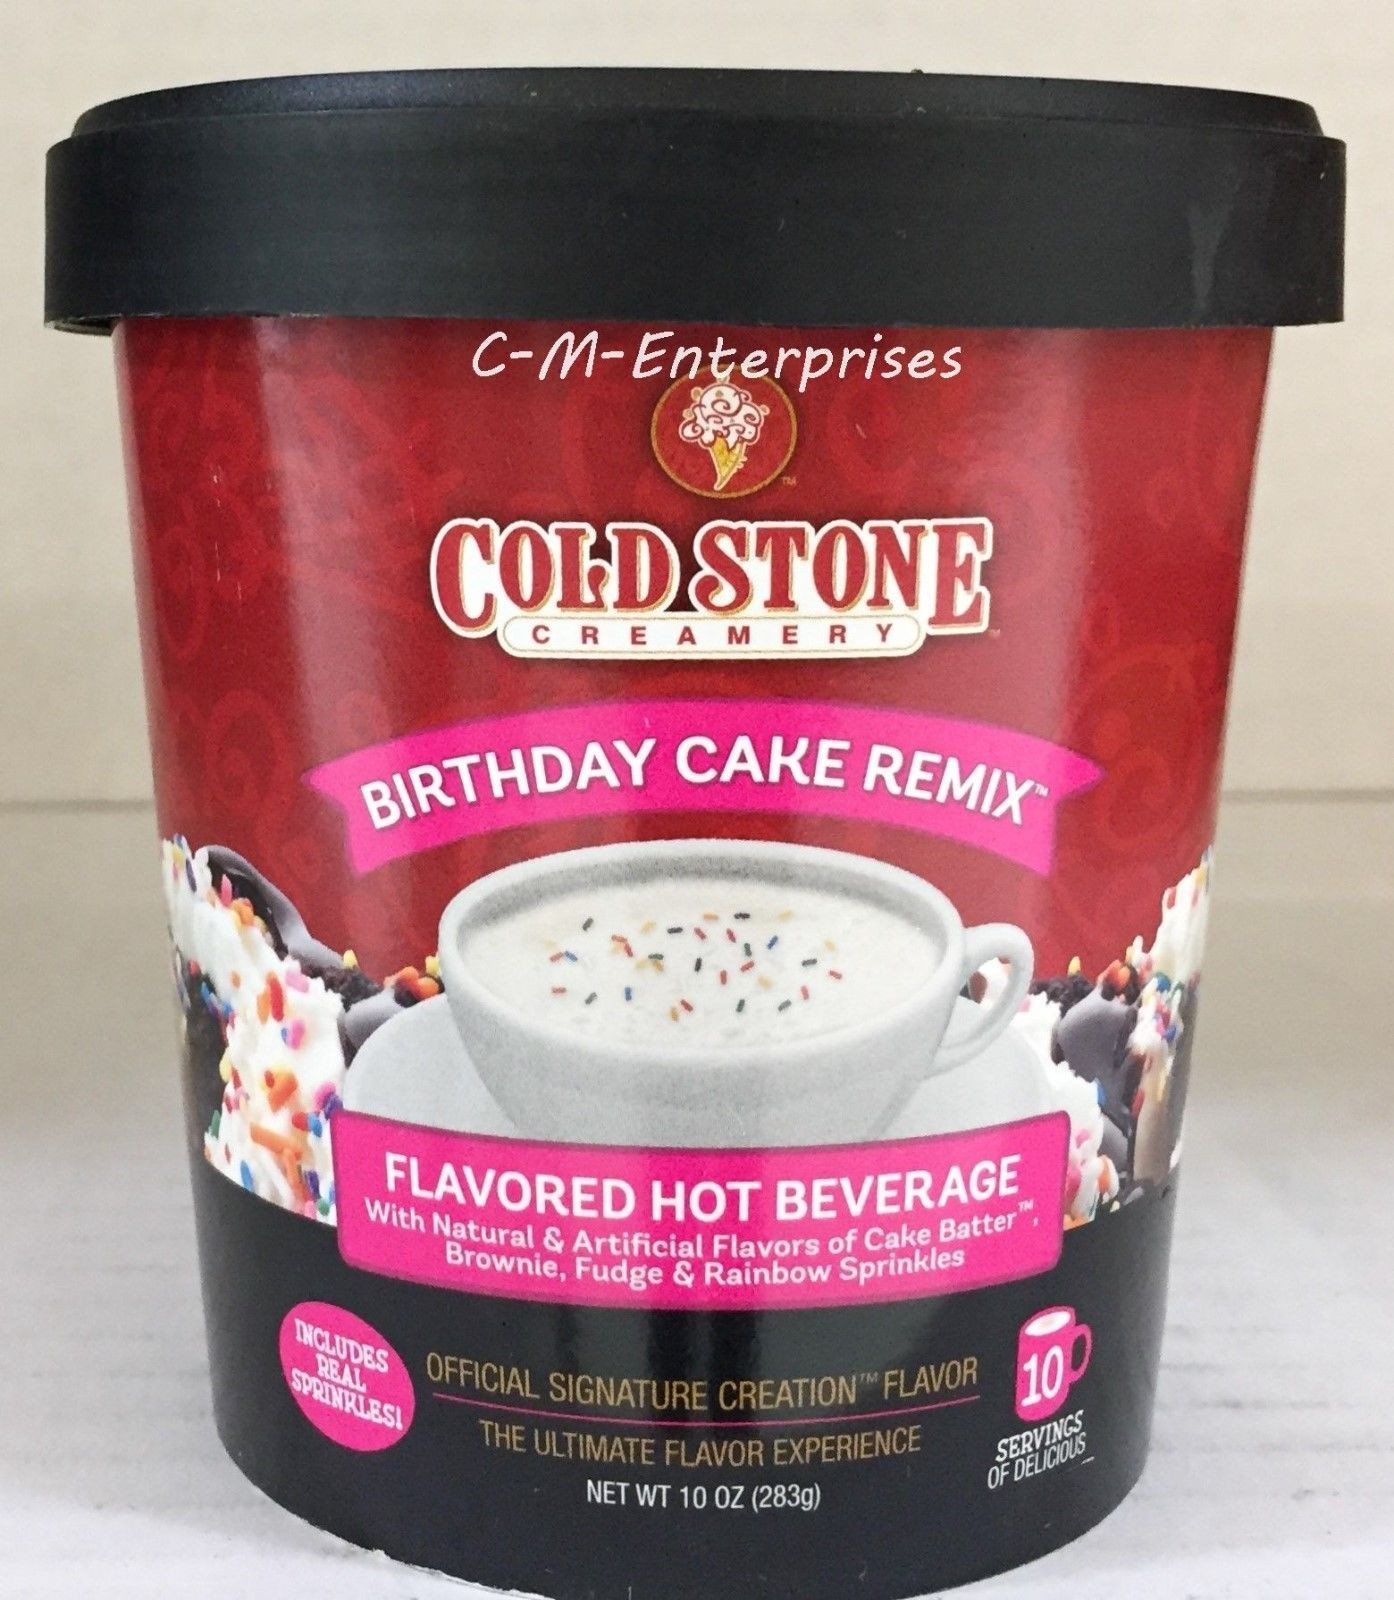 Birthday Cake Remix Cold Stone
 Cold Stone Creamery Birthday Cake Remix Flavored Hot